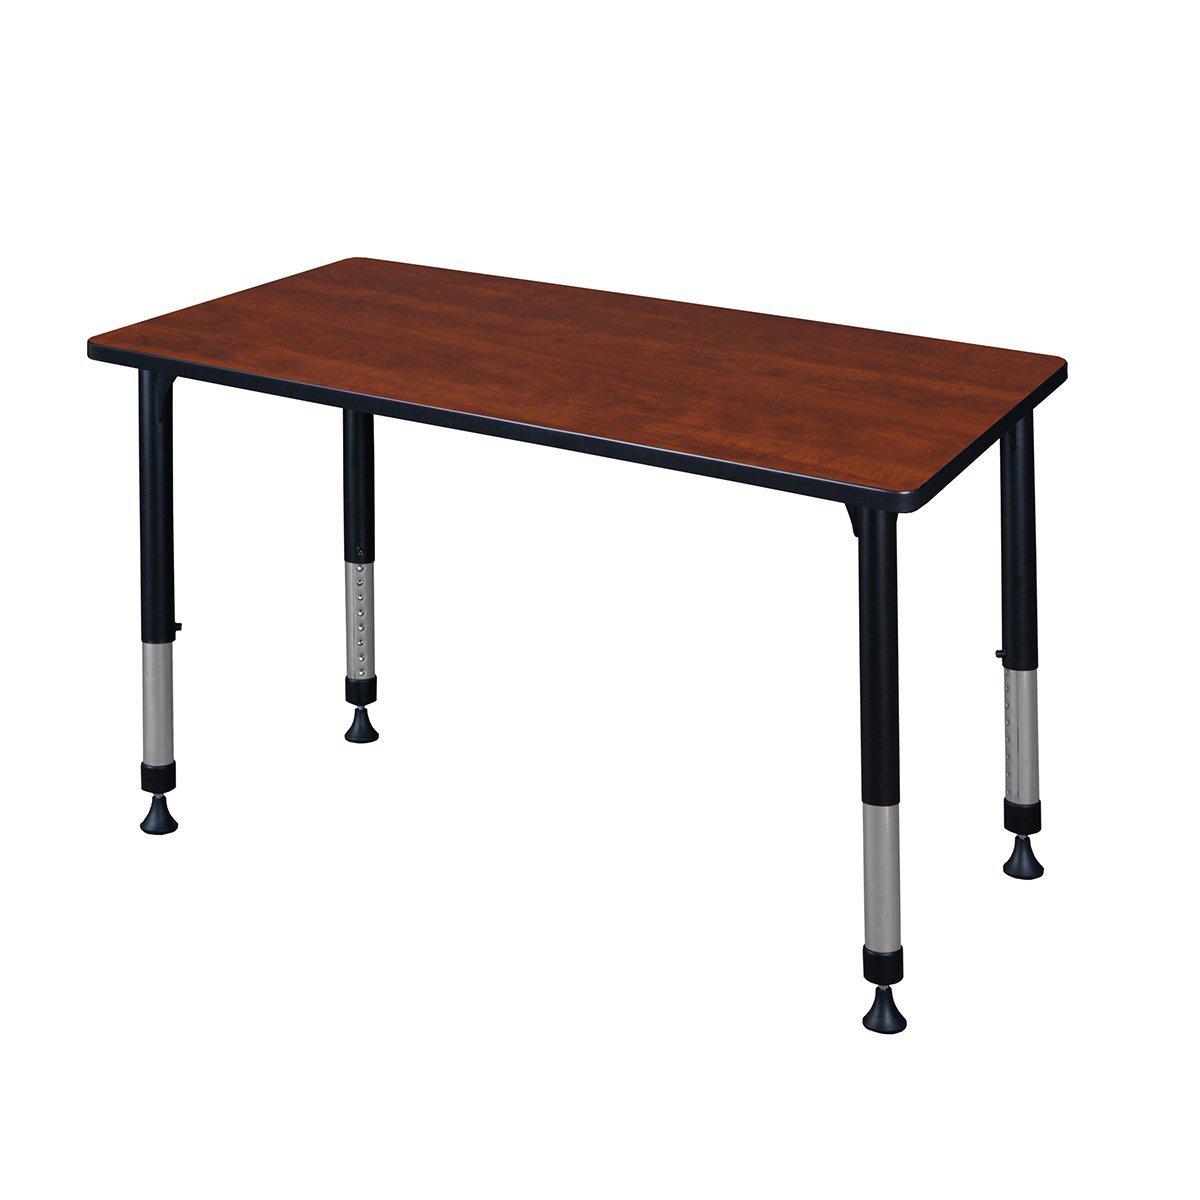 Kee 48" x 30" Rectangular Height Adjustable Classroom Activity Table